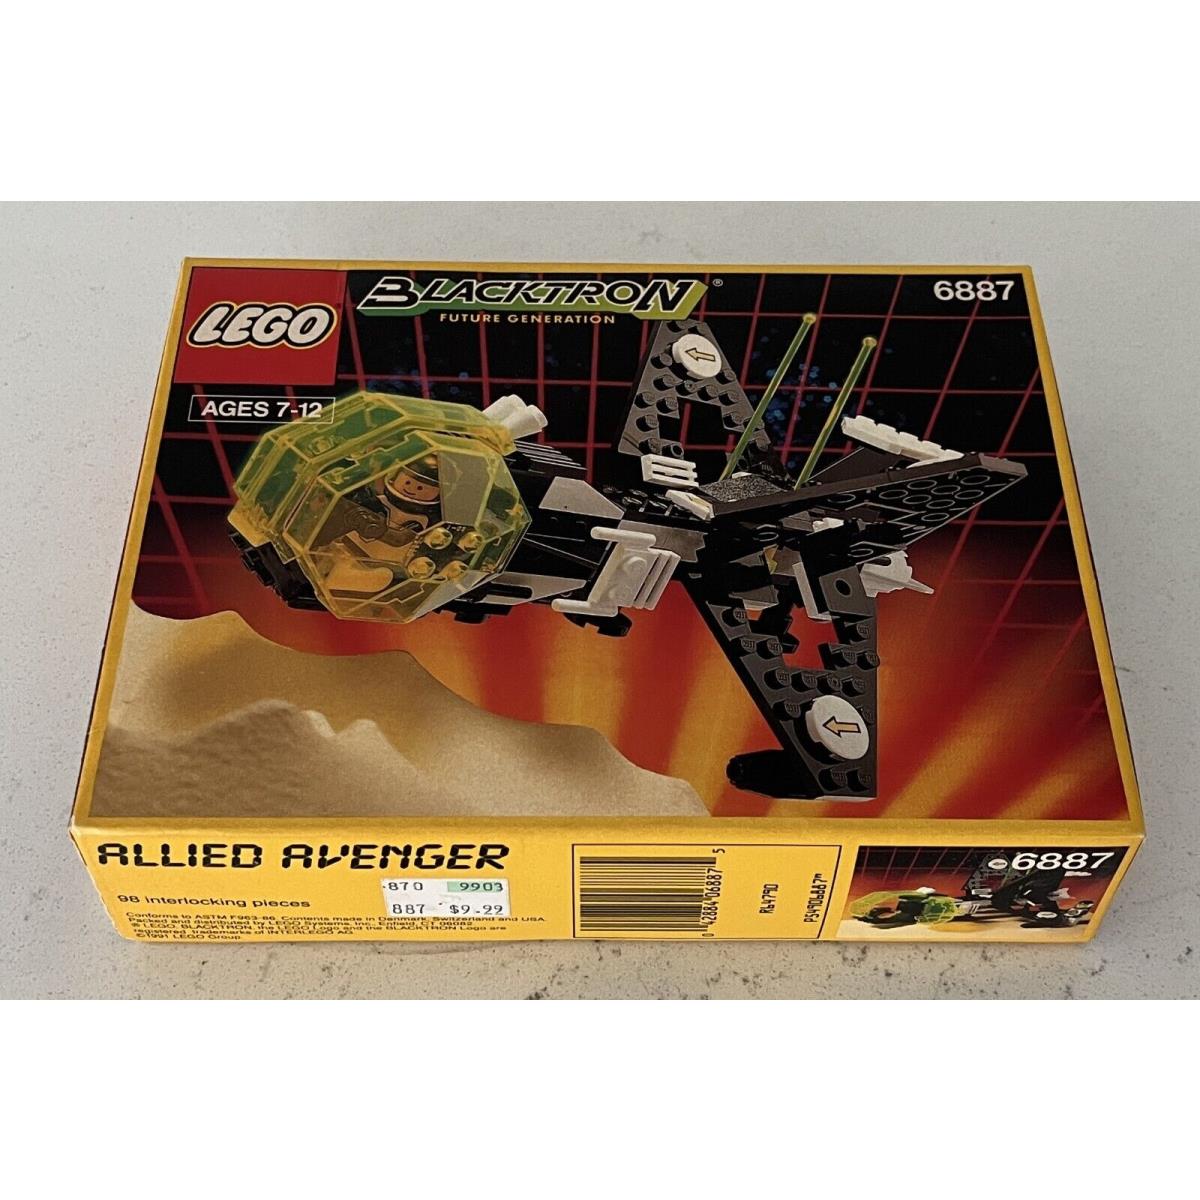 Lego - 6887 Blacktron Future Generation Allied Avenger 1991